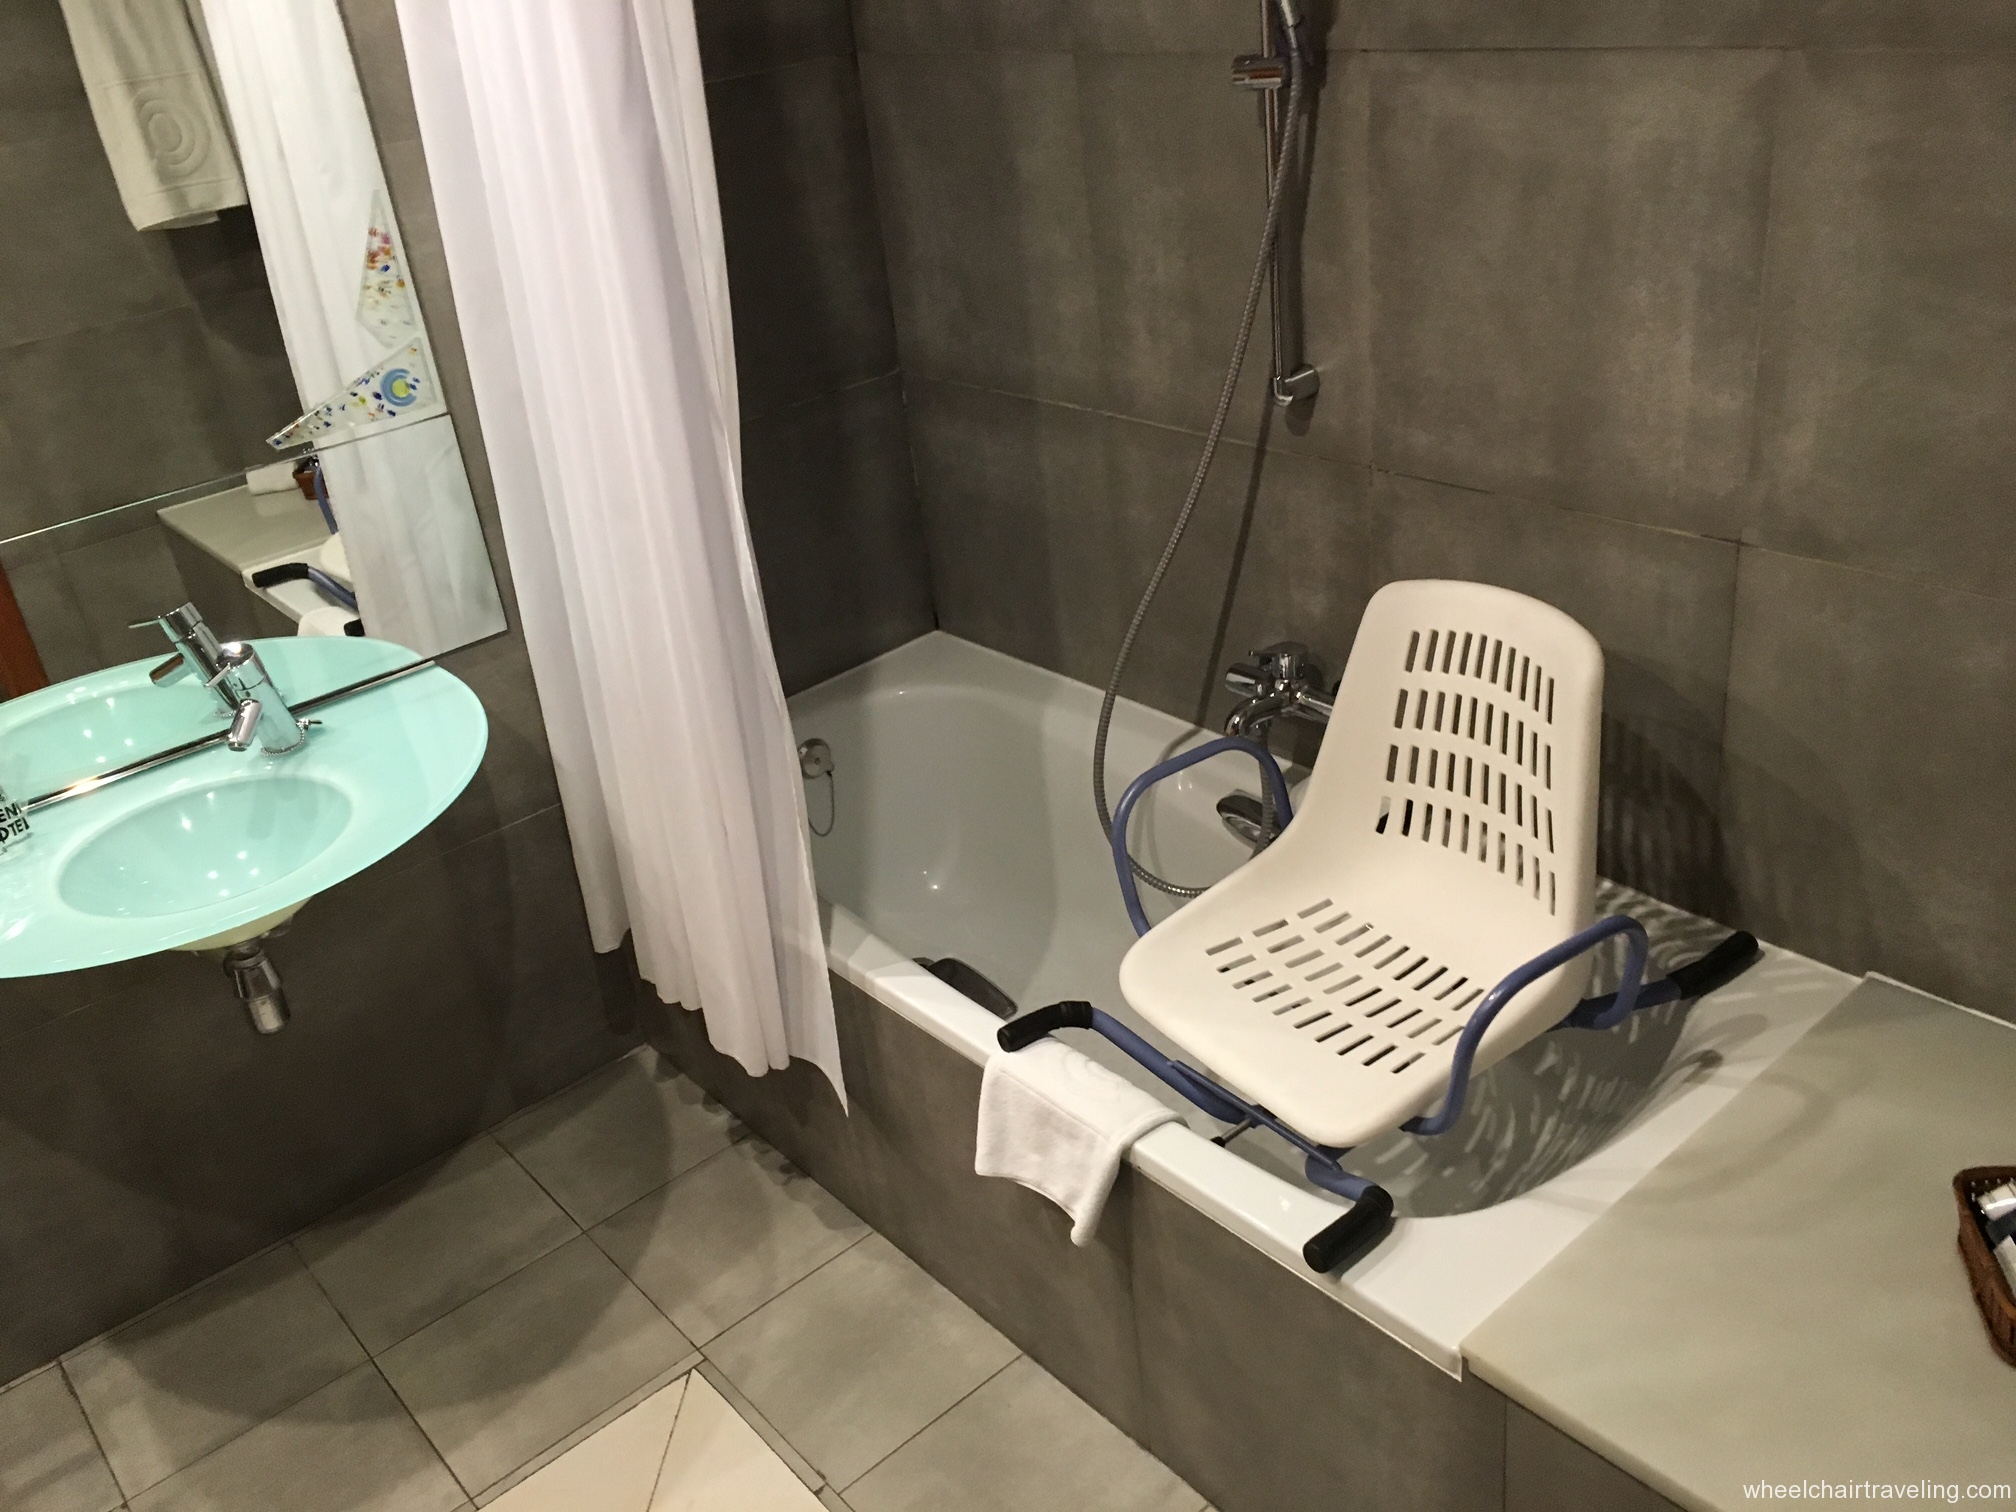 Barcelona hotel bathroom bathtub